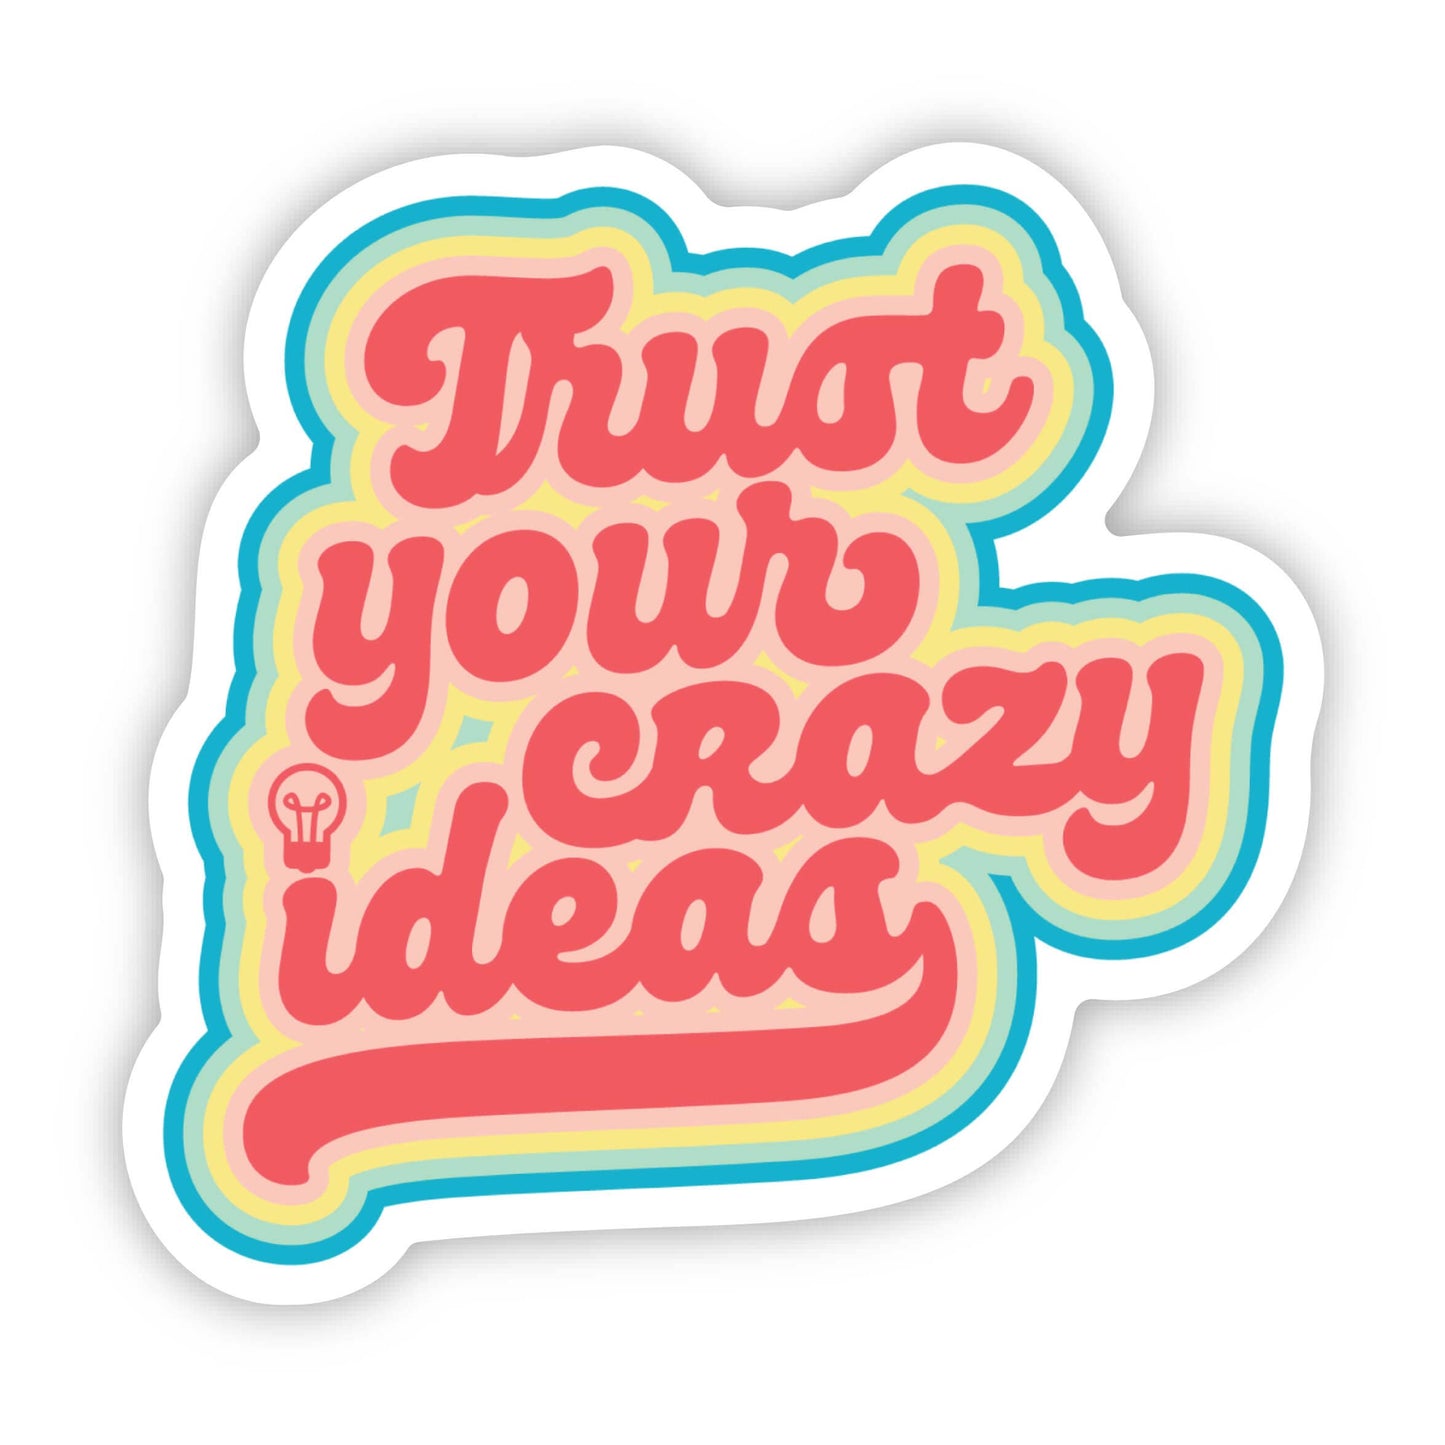 Trust Your Crazy Ideas Sticker - motivational sticker